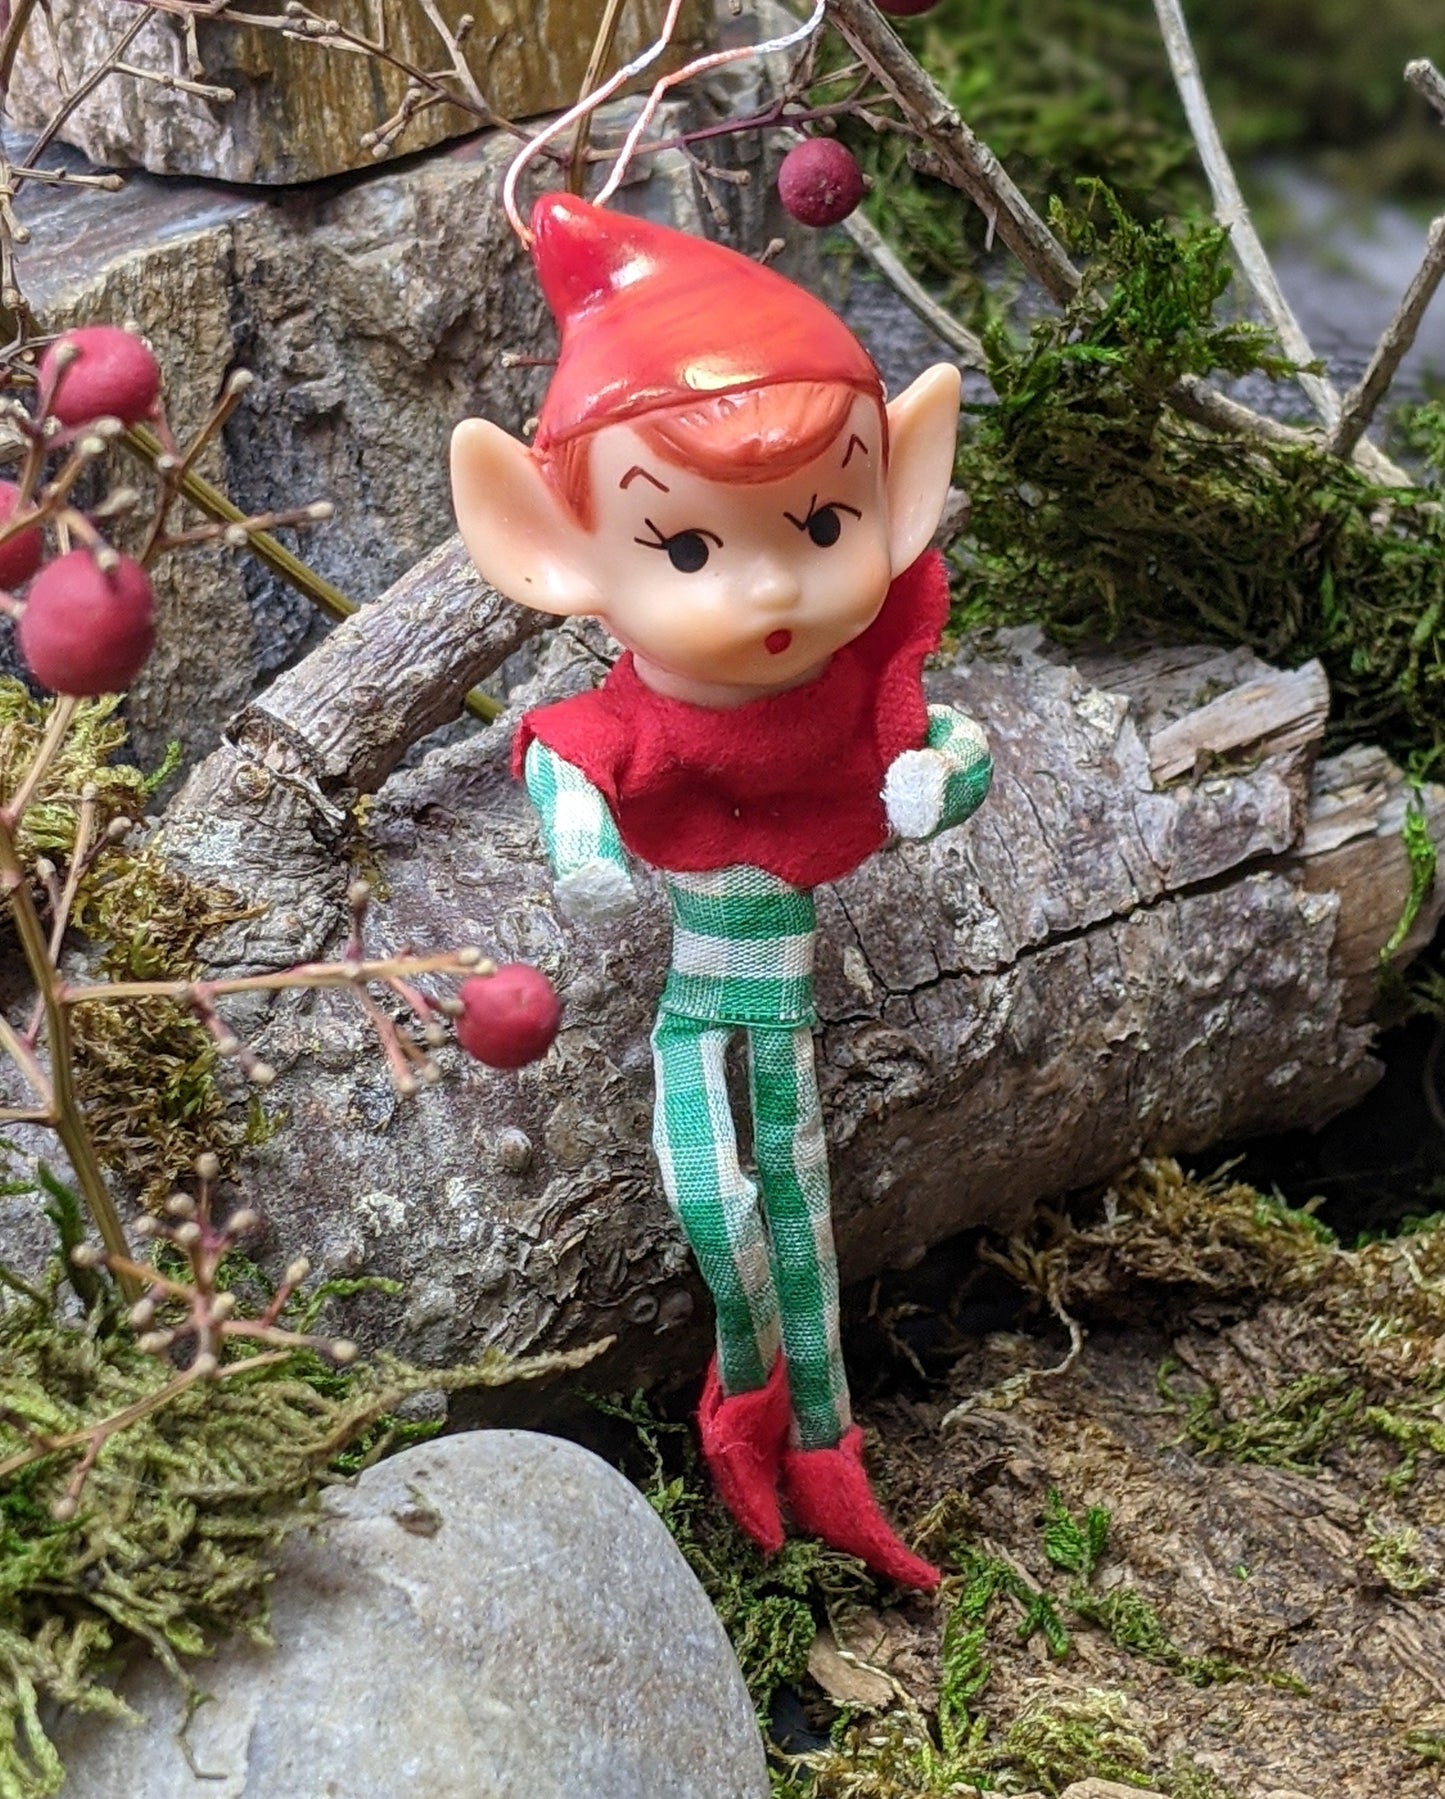 Vintage mini pixie elf ornament